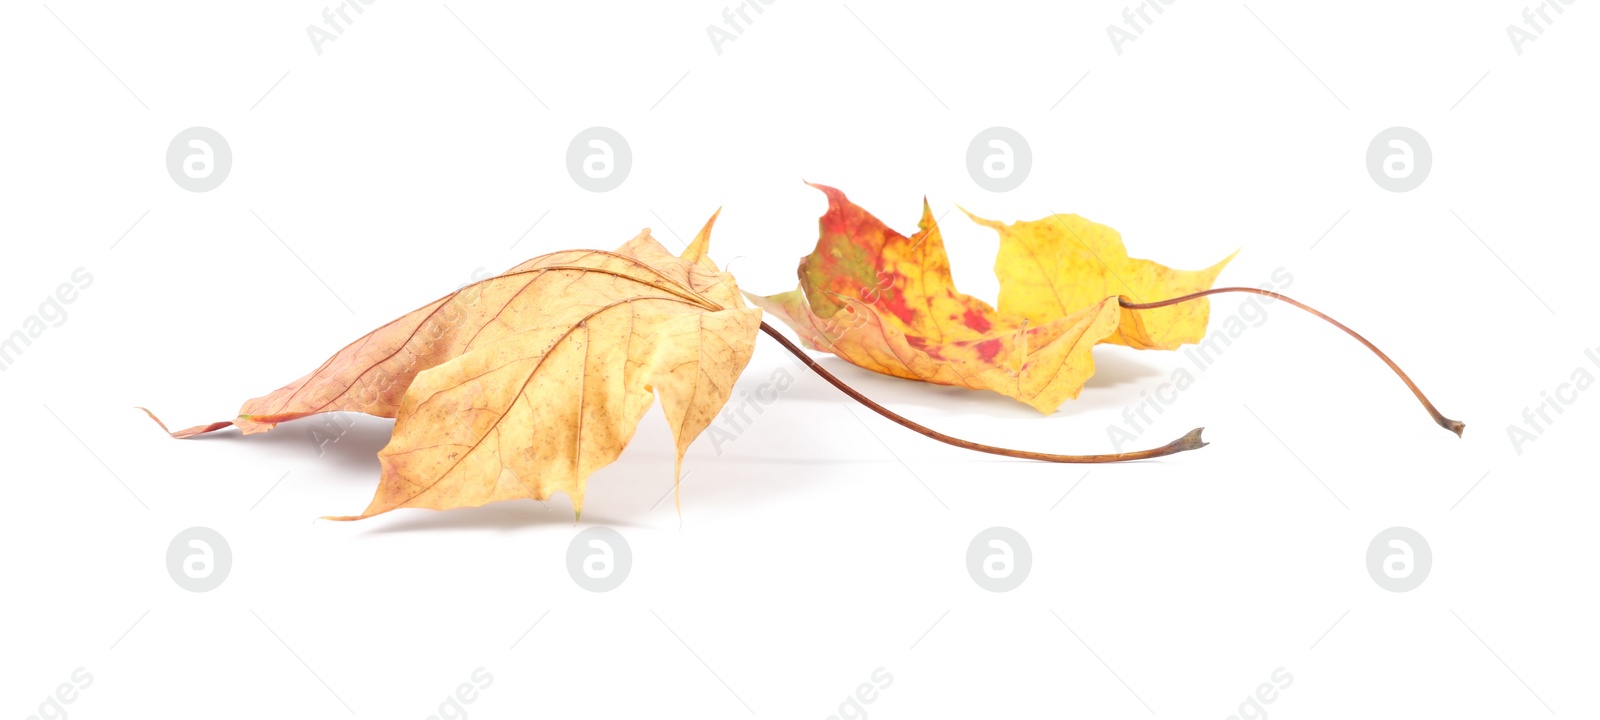 Photo of Autumn season. Beautiful maple leaves isolated on white